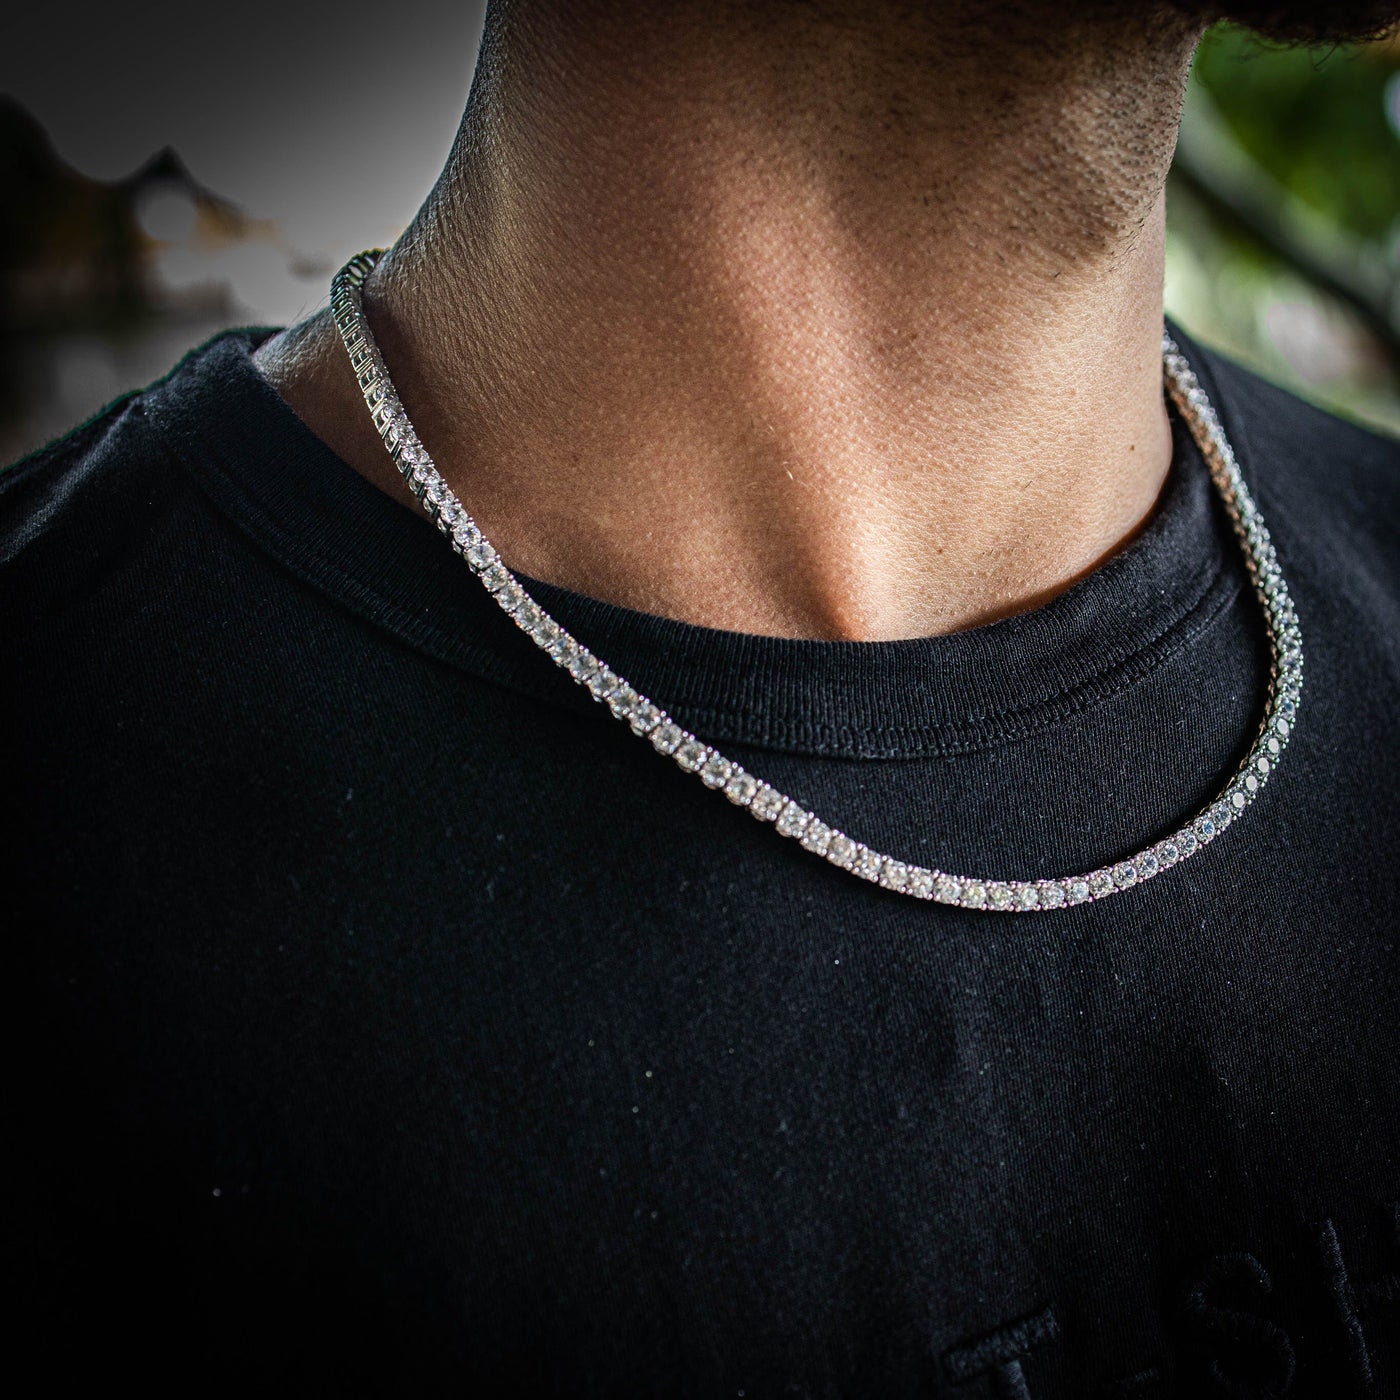 New 9ct Gold Diamond Cut Cross Pendant & Chain Necklace